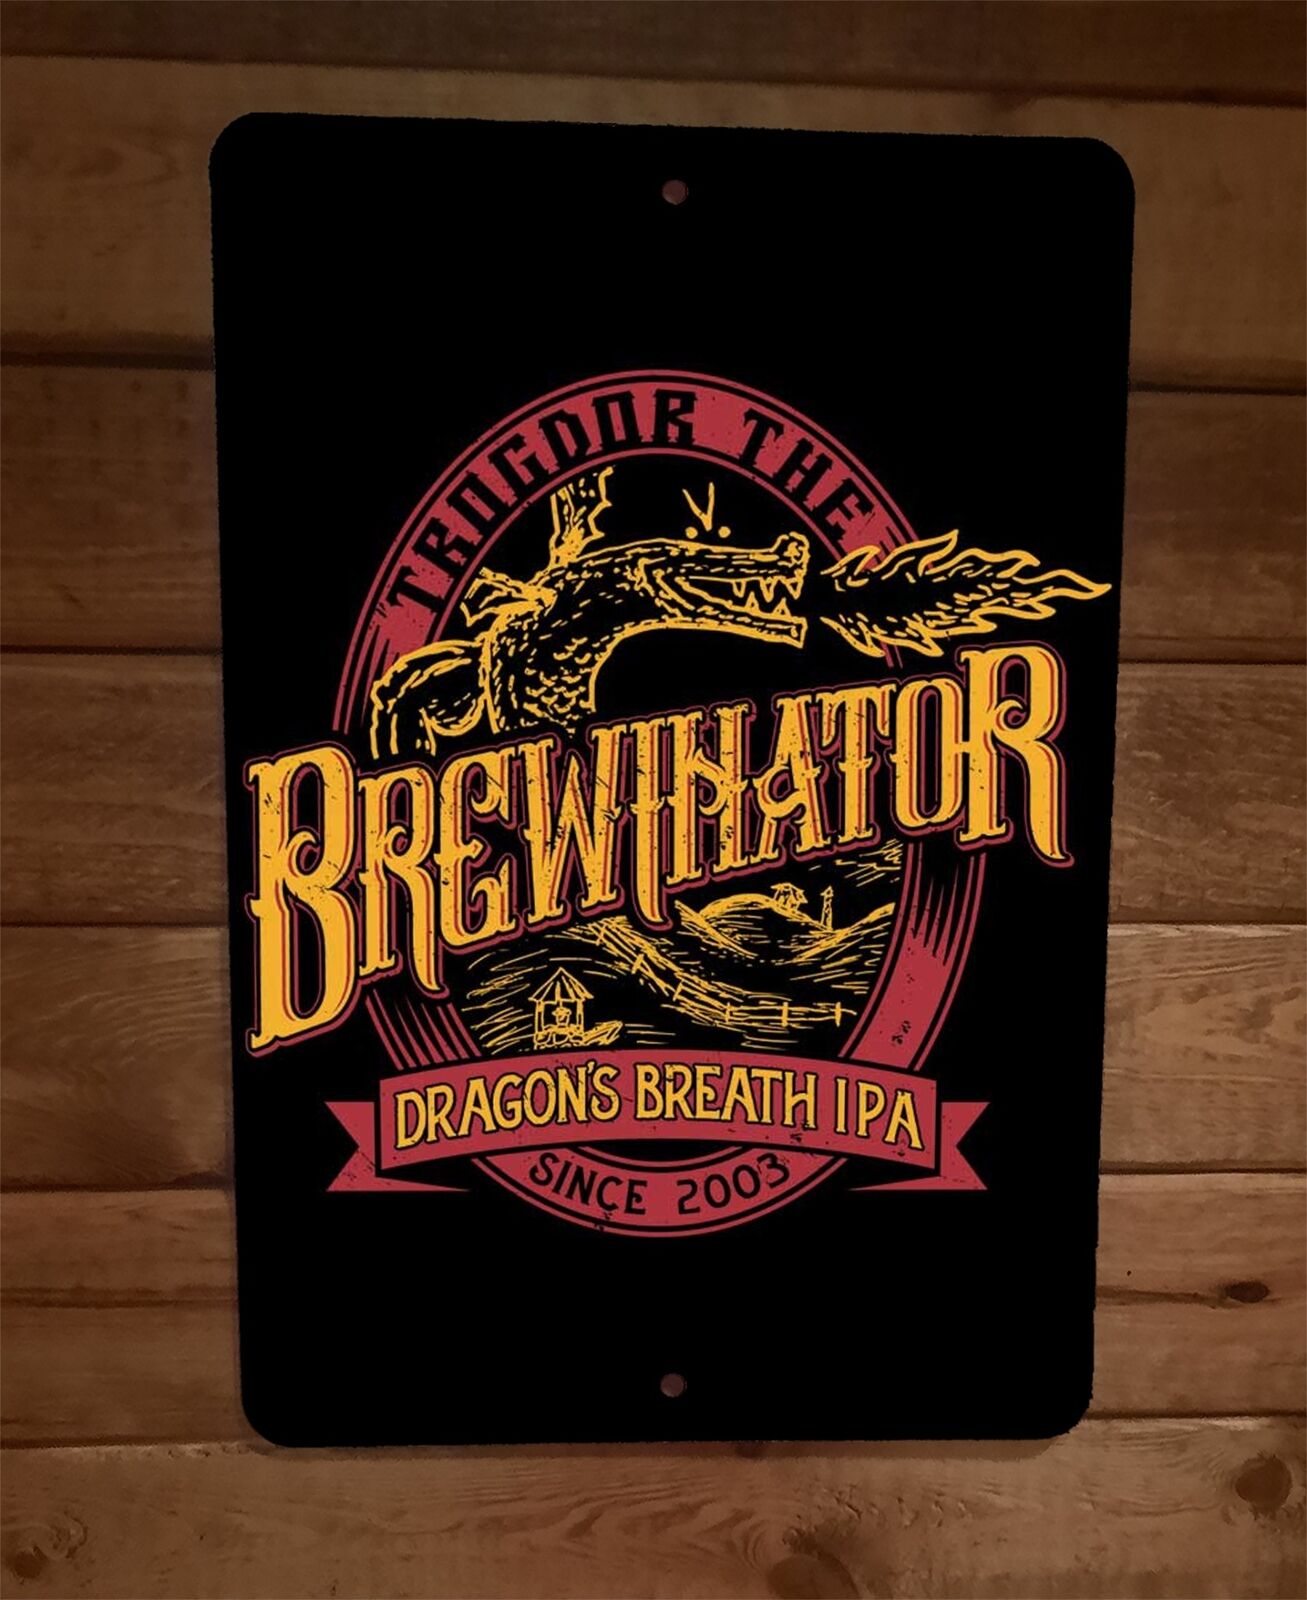 Throgdor the Brewinator Dragons Breath IPA 8x12 Metal Wall Bar Sign Poster